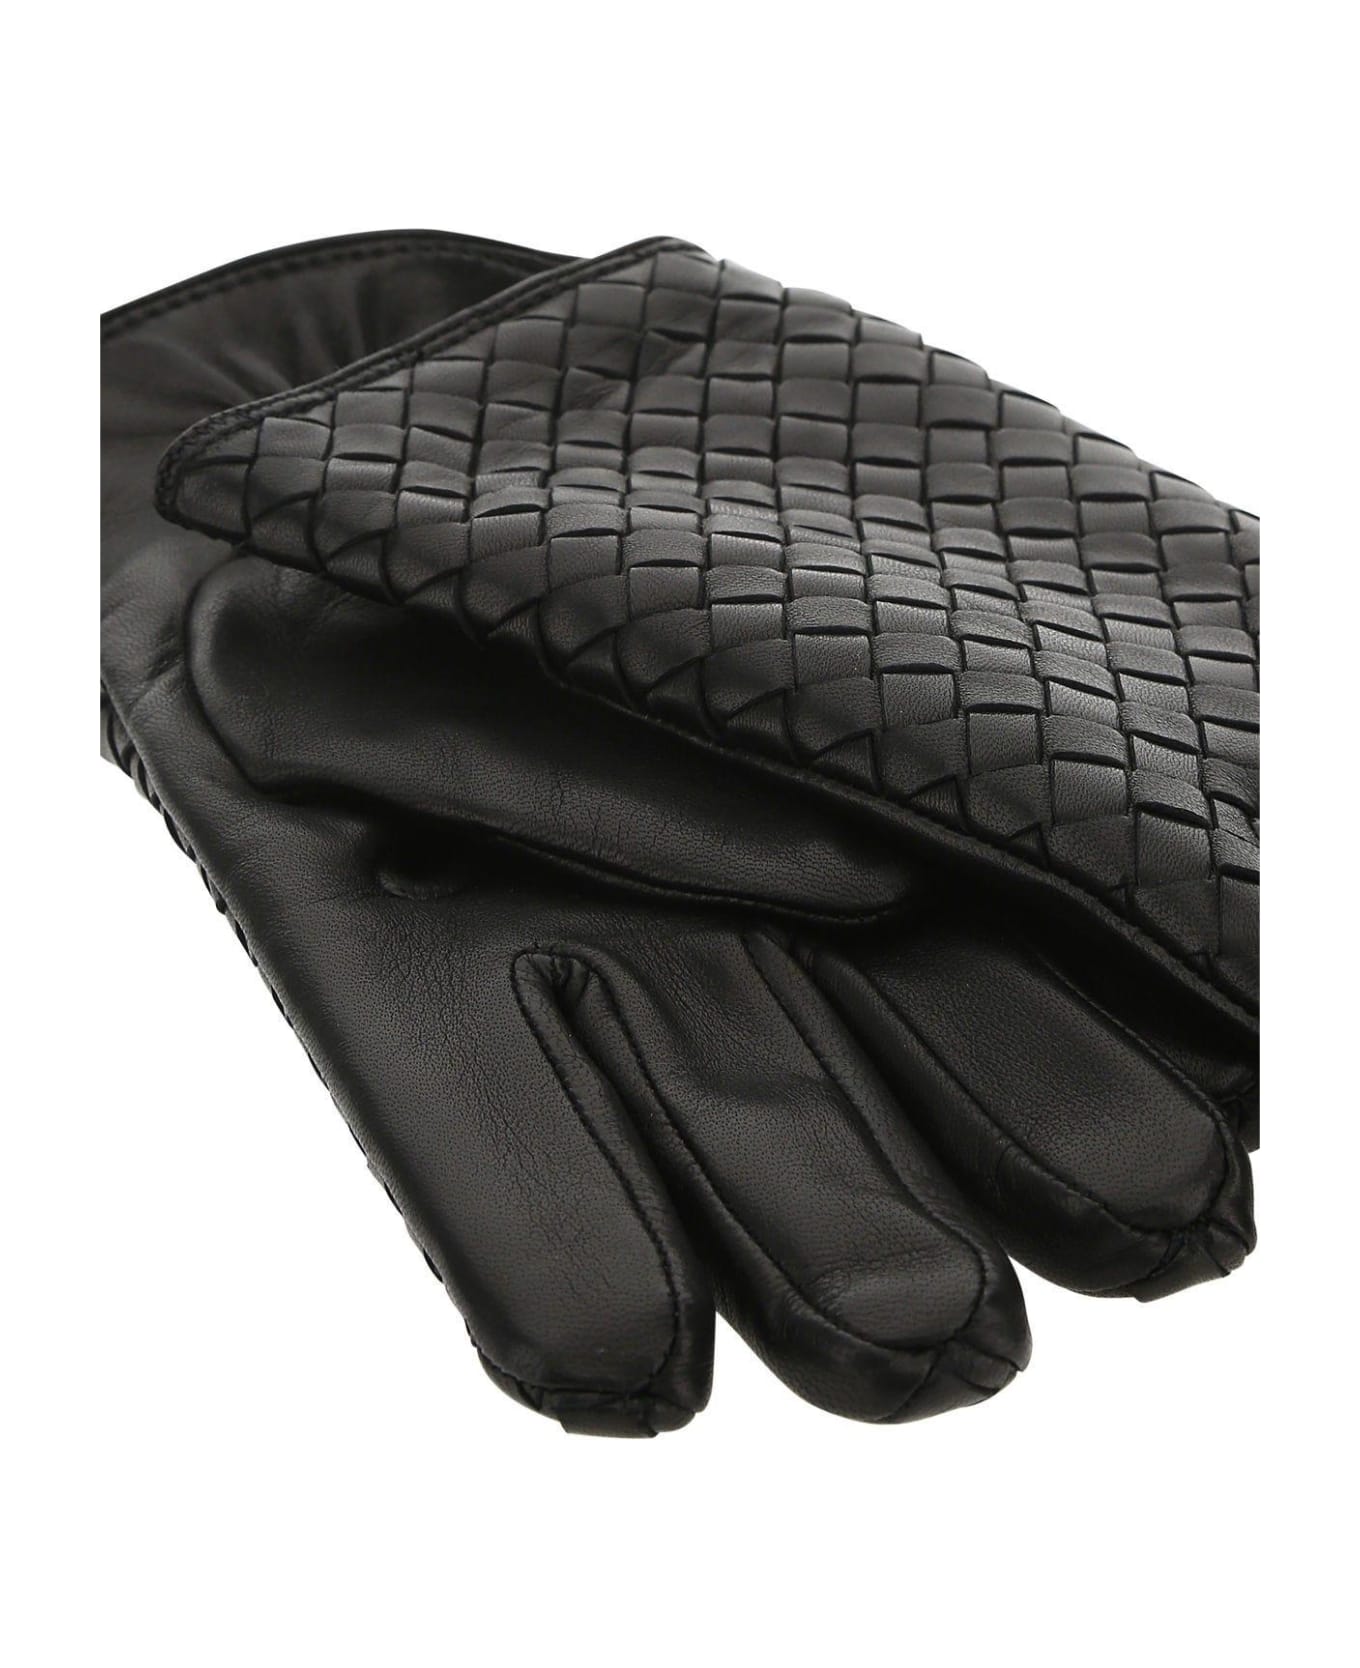 Bottega Veneta Black Leather Gloves - NERO